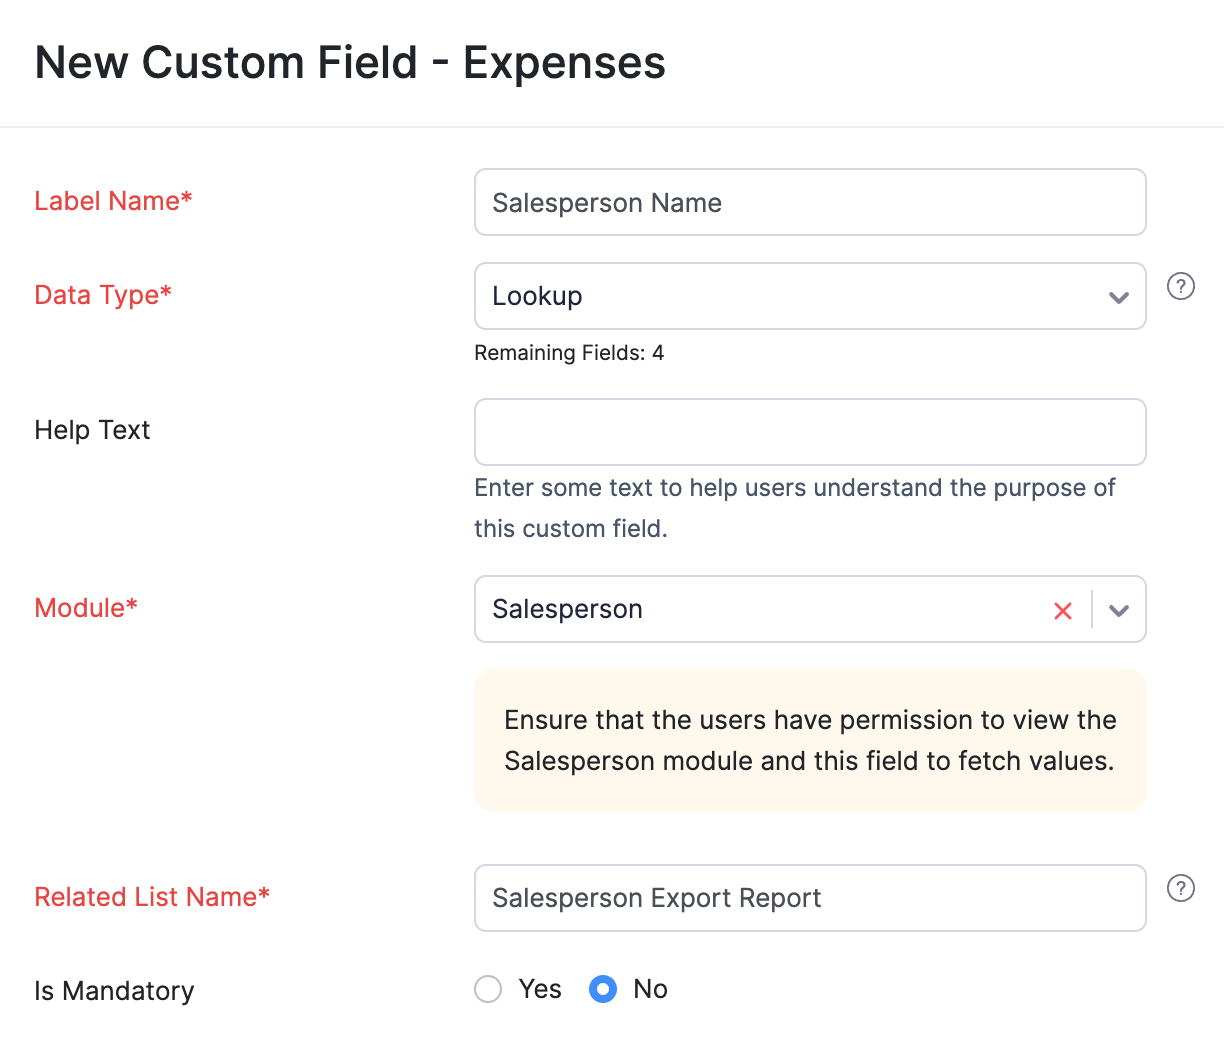 Enter the custom field details